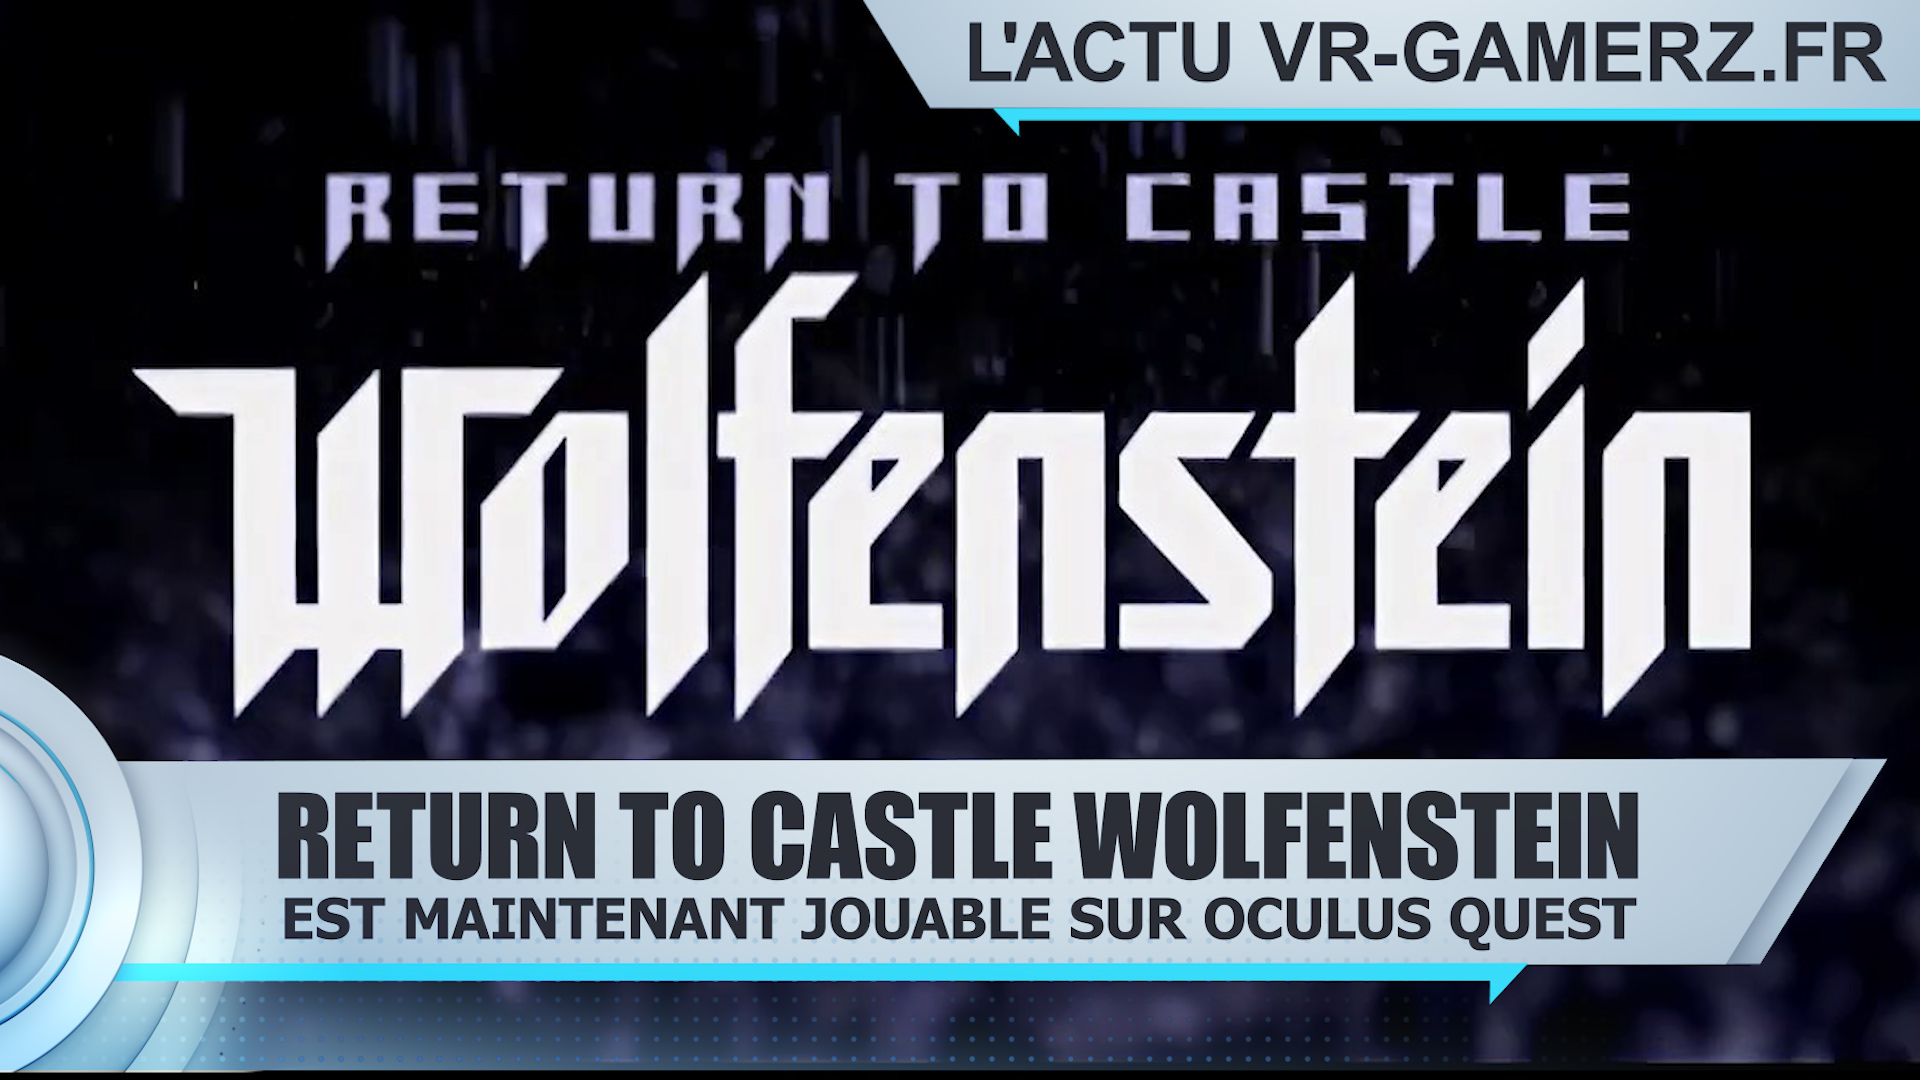 Return to Castle Wolfenstein est disponible sur Oculus quest